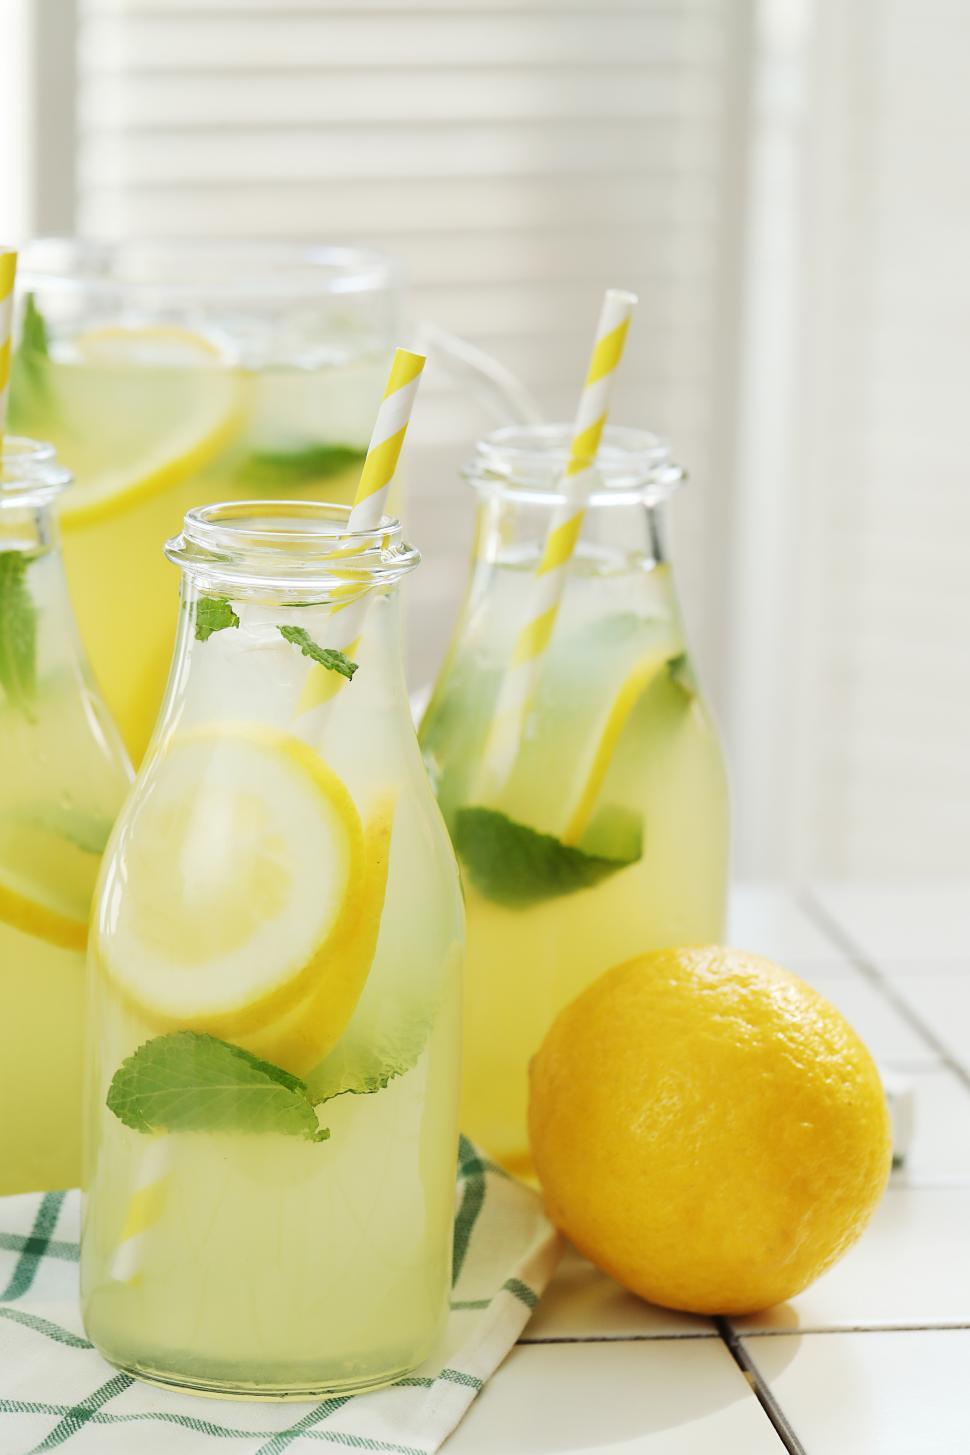 Free Image of Refreshing lemonade drink 